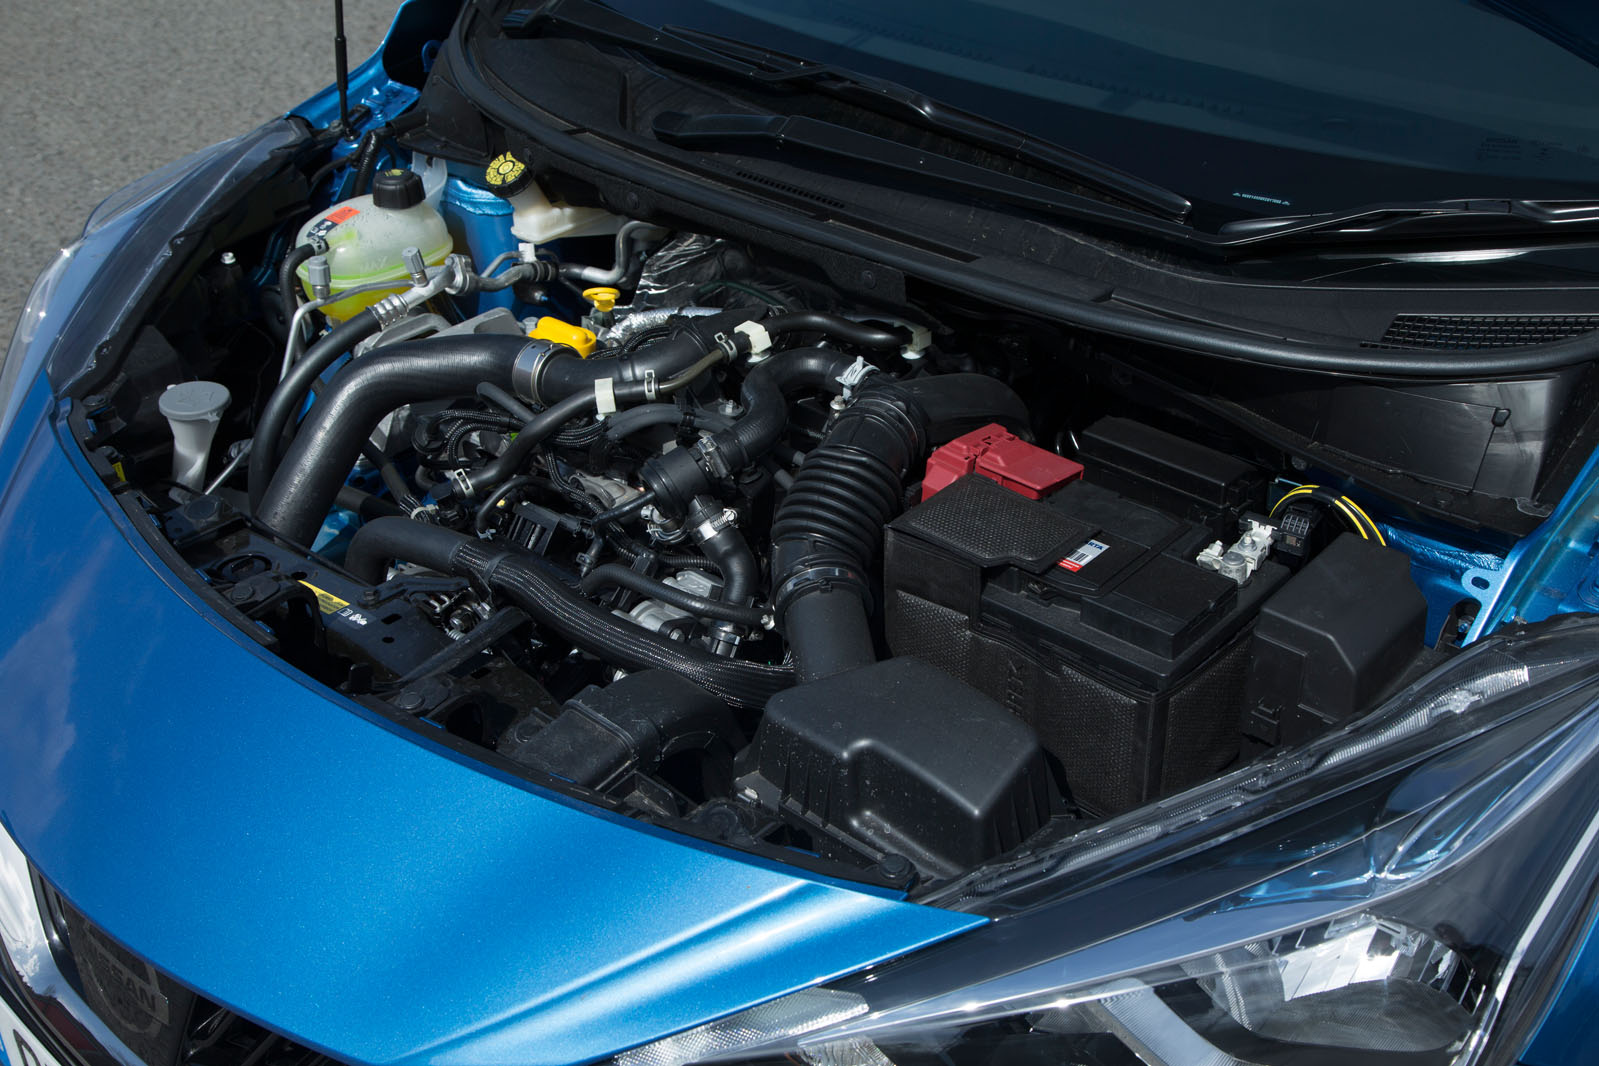 0.9-litre Nissan Micra petrol engine